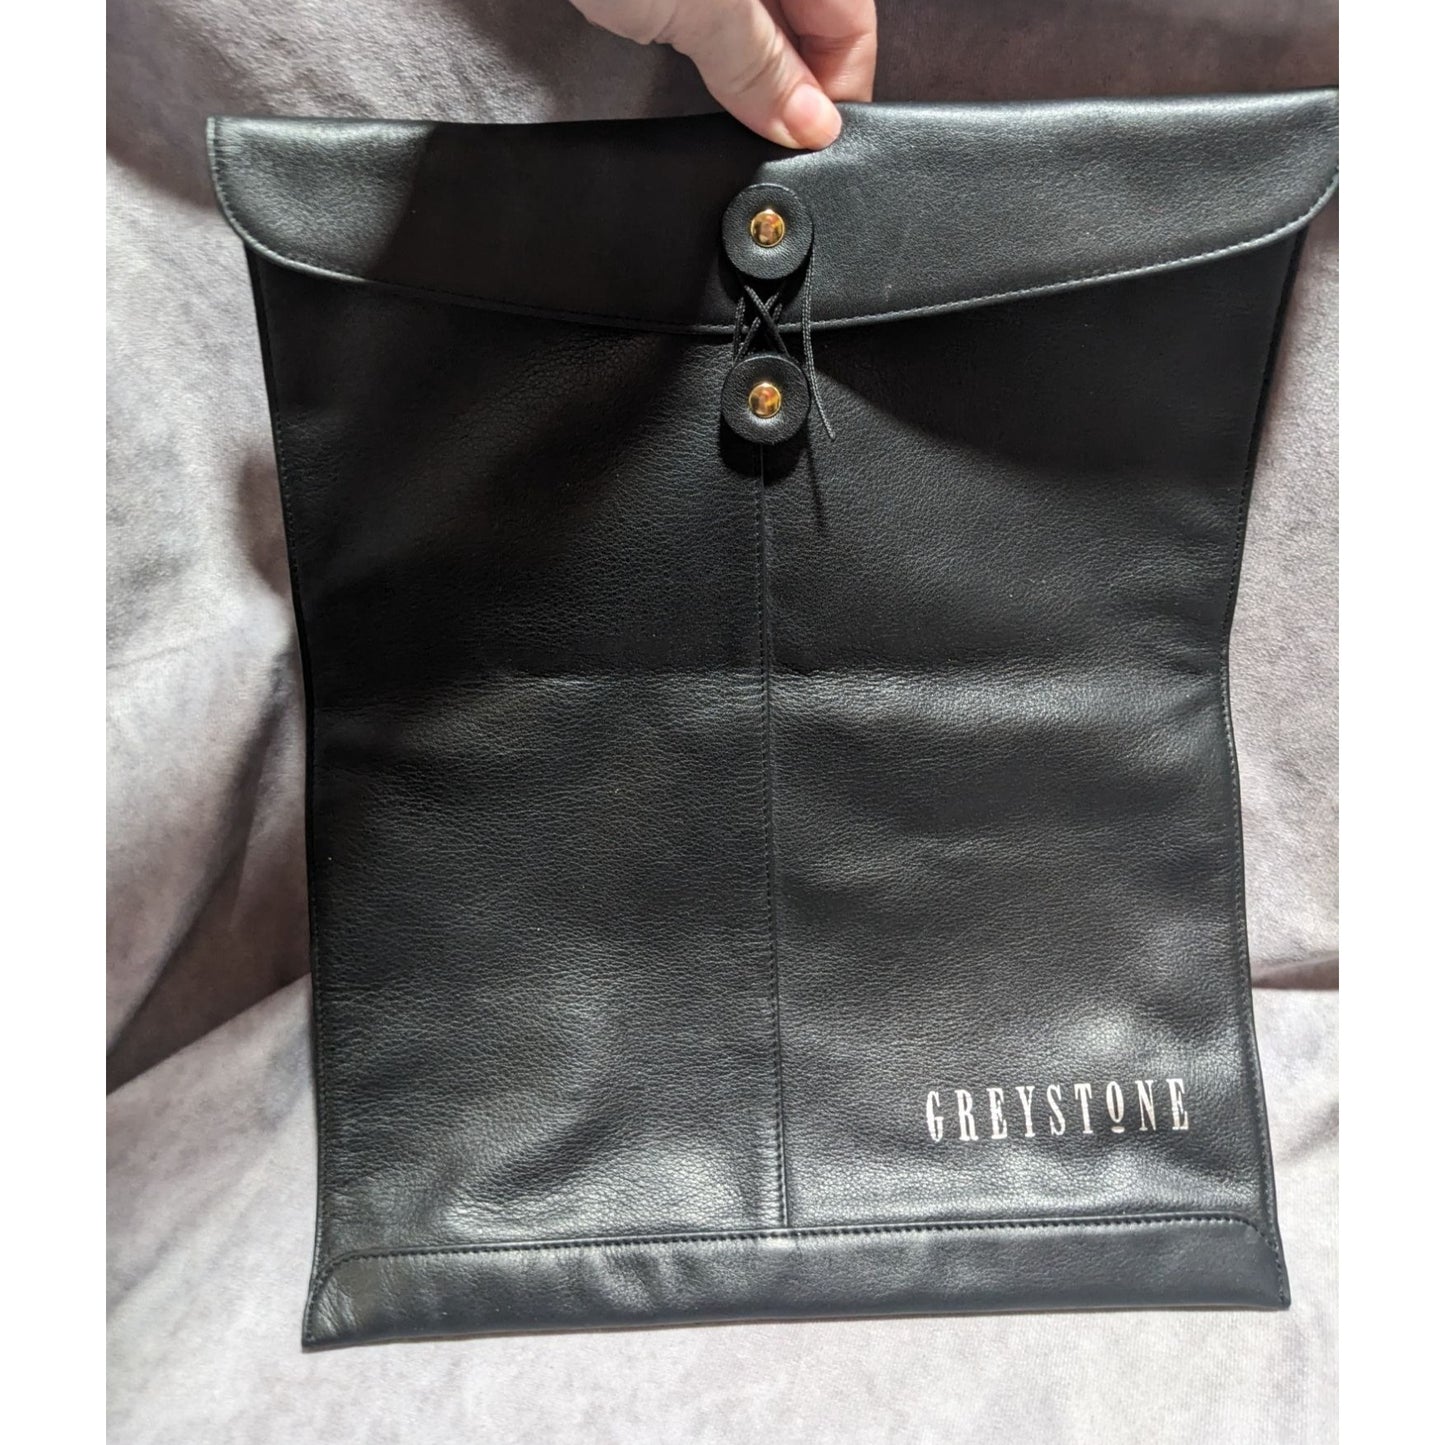 Greystone Genuine Leather Document Bag